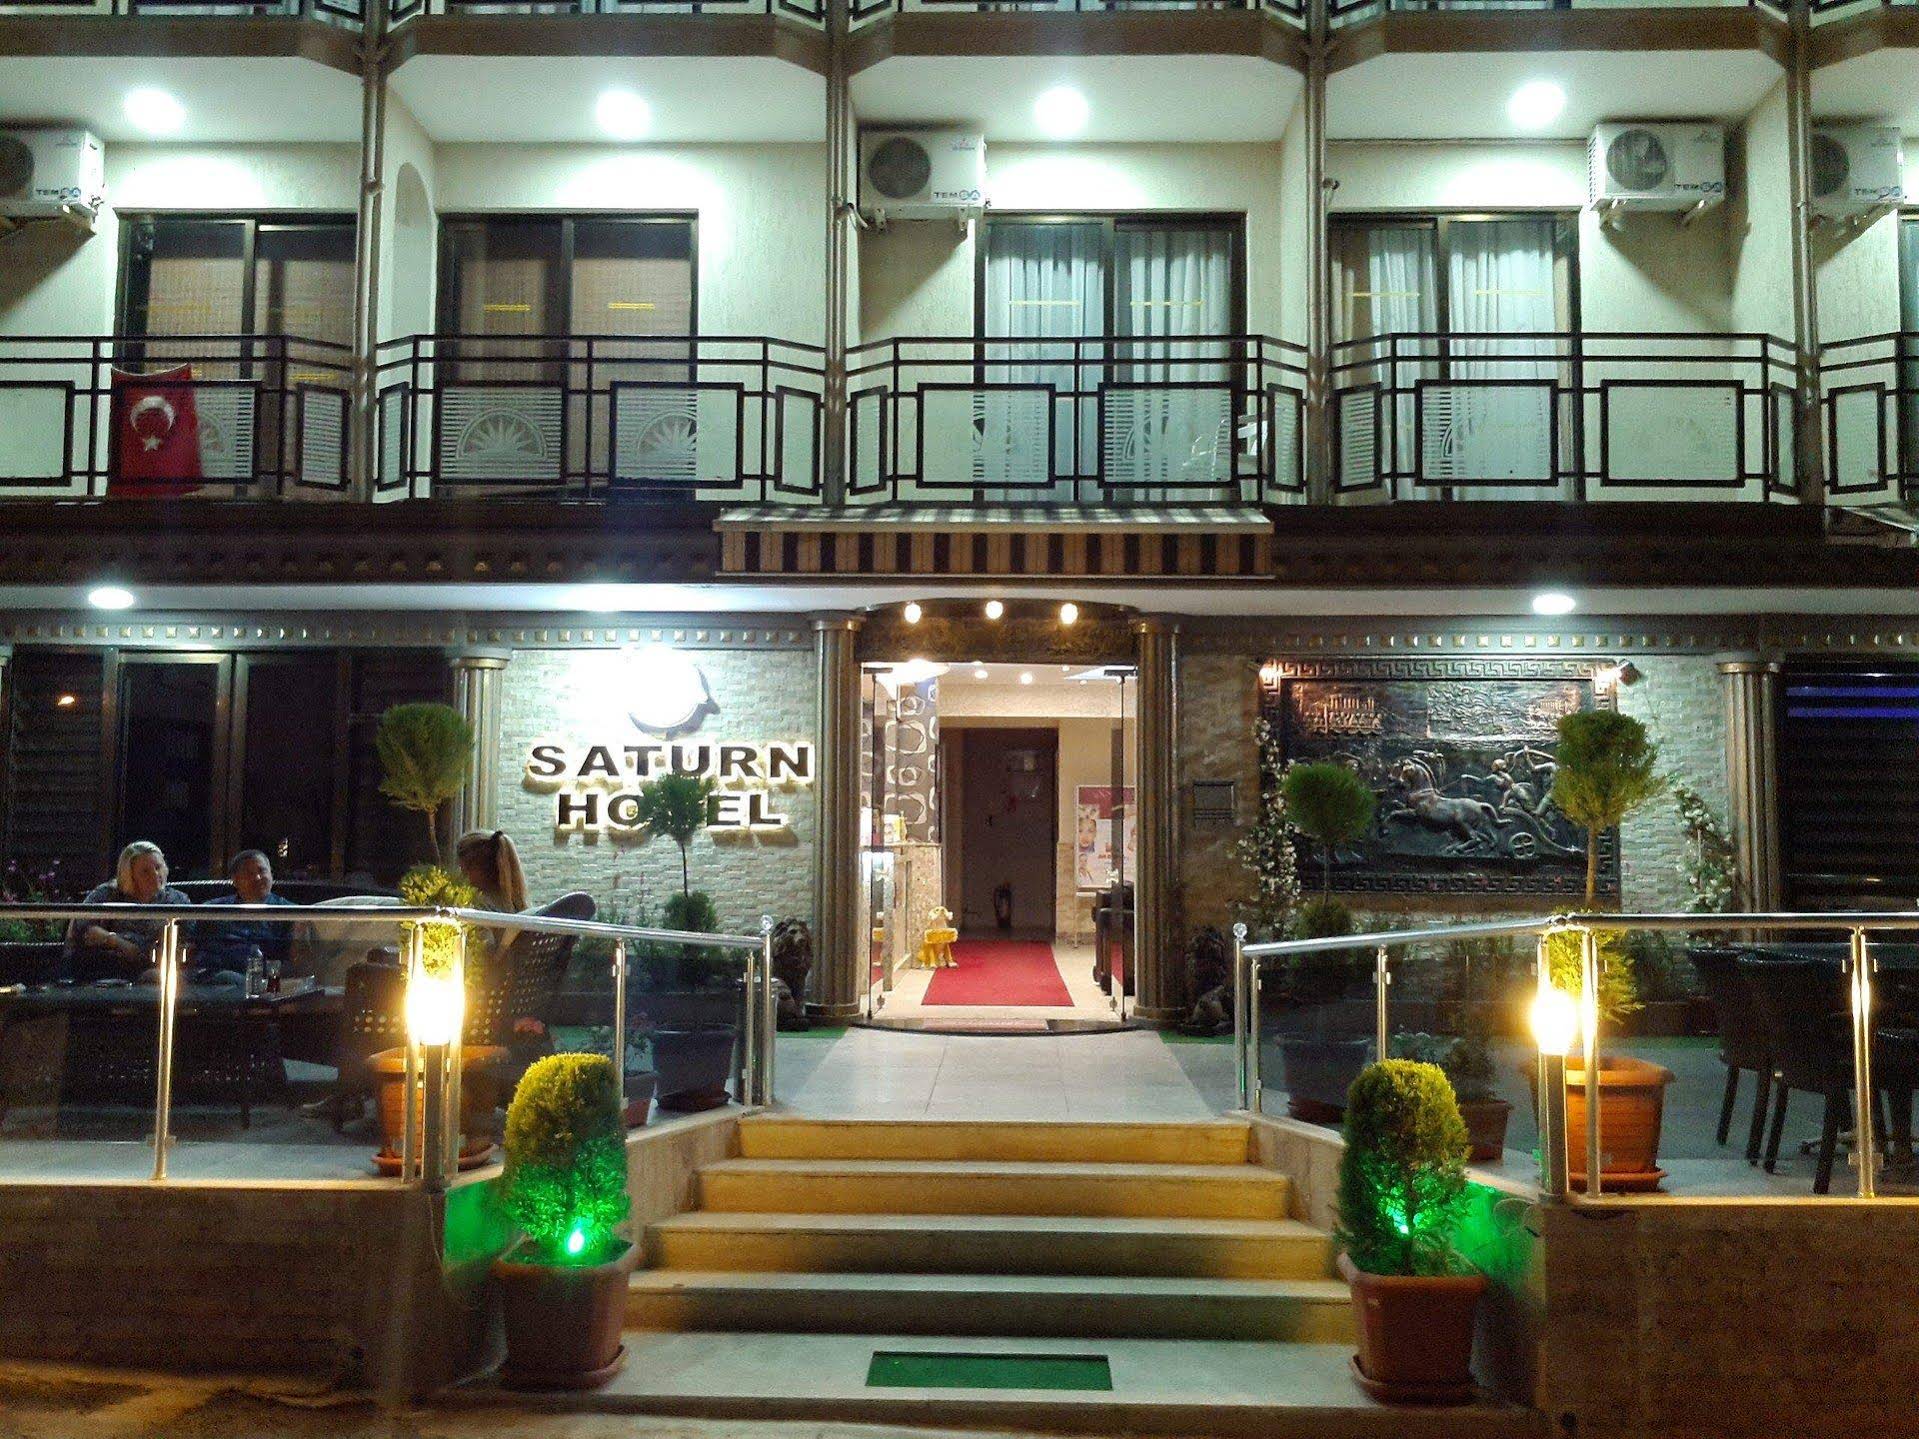 Saturn Hotel